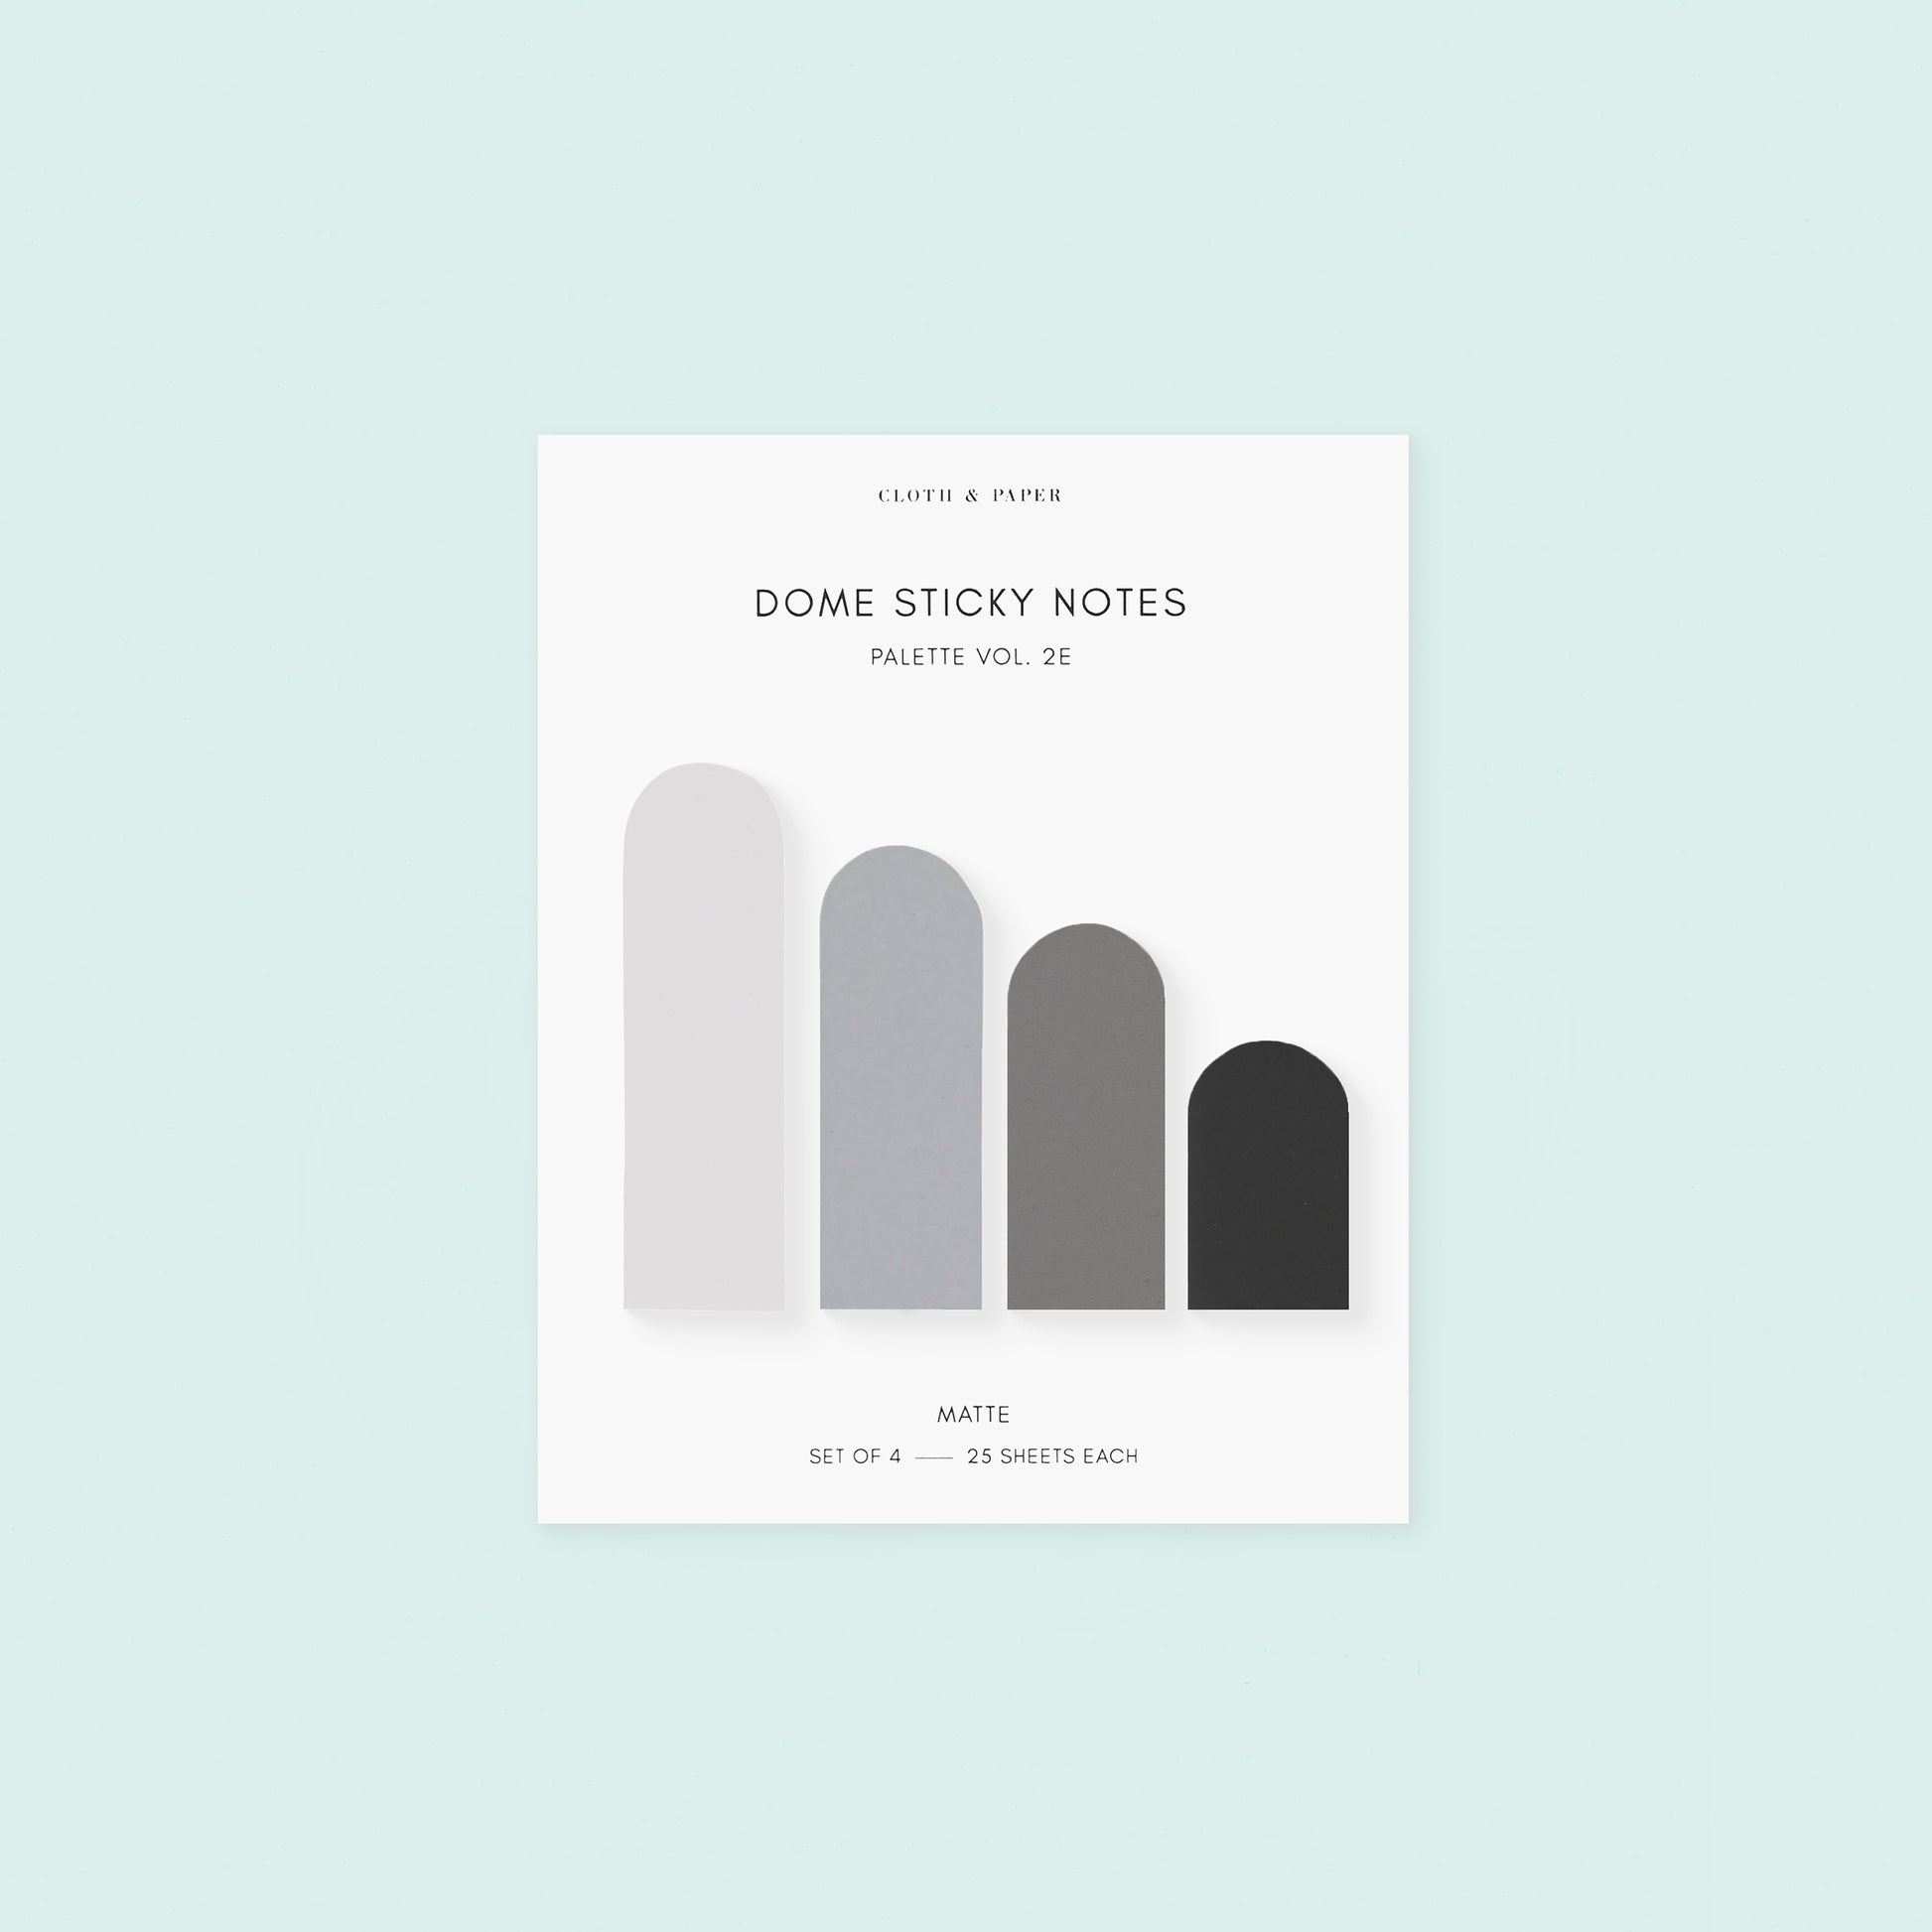 Cloth & Paper Dome Sticky Notes Palette Vol. 2E | Aspen, Fog, Graphite & Avant Garde 